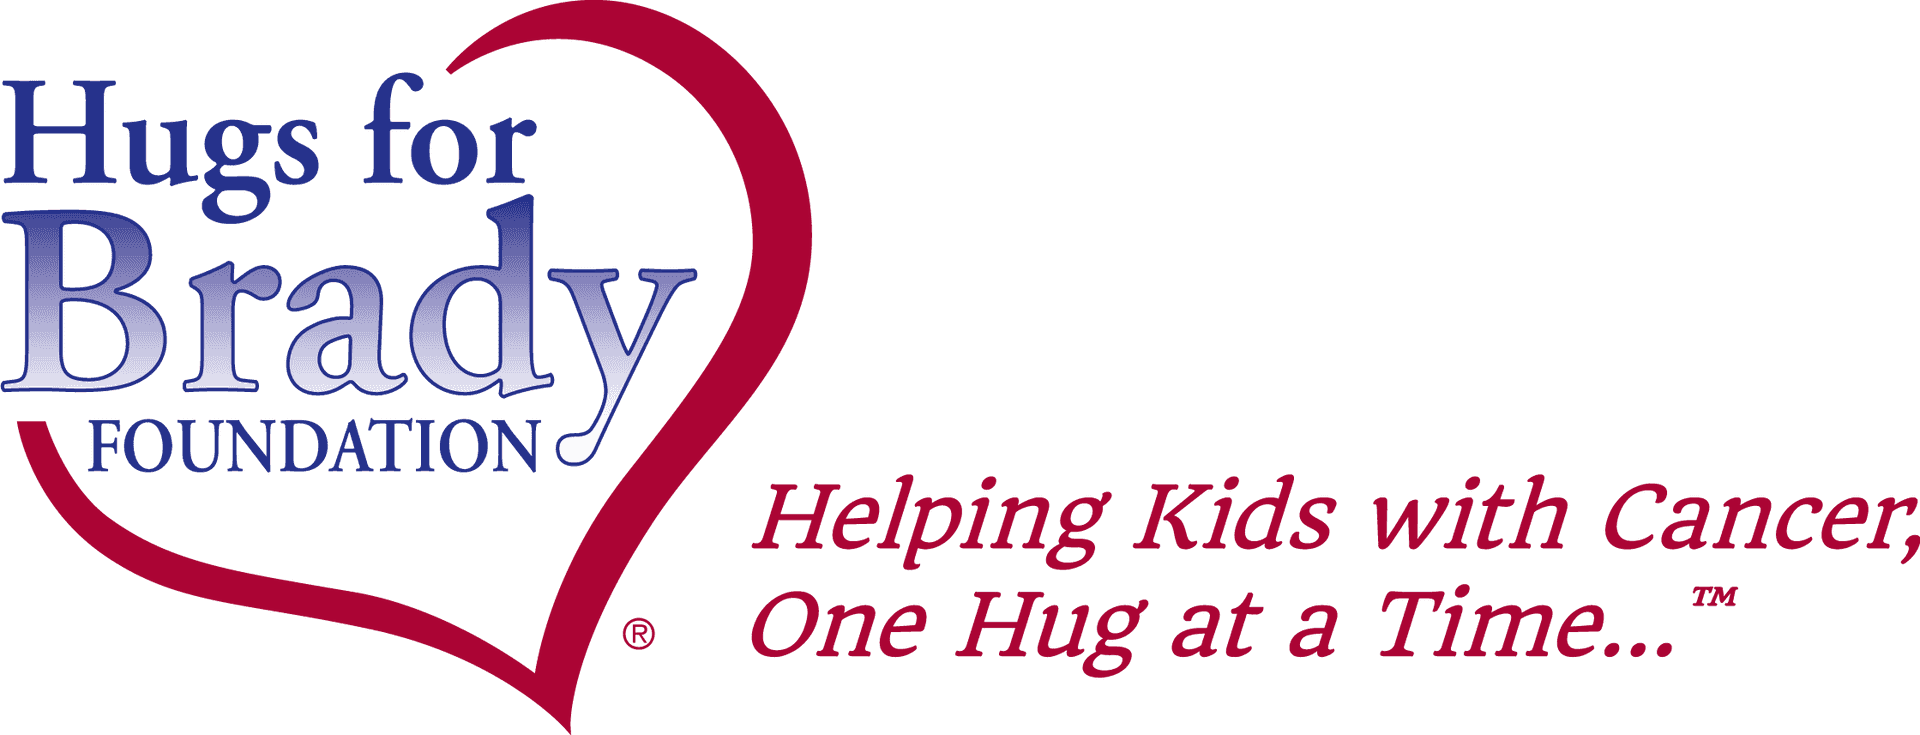 Hugsfor Brady Foundation Logo PNG image